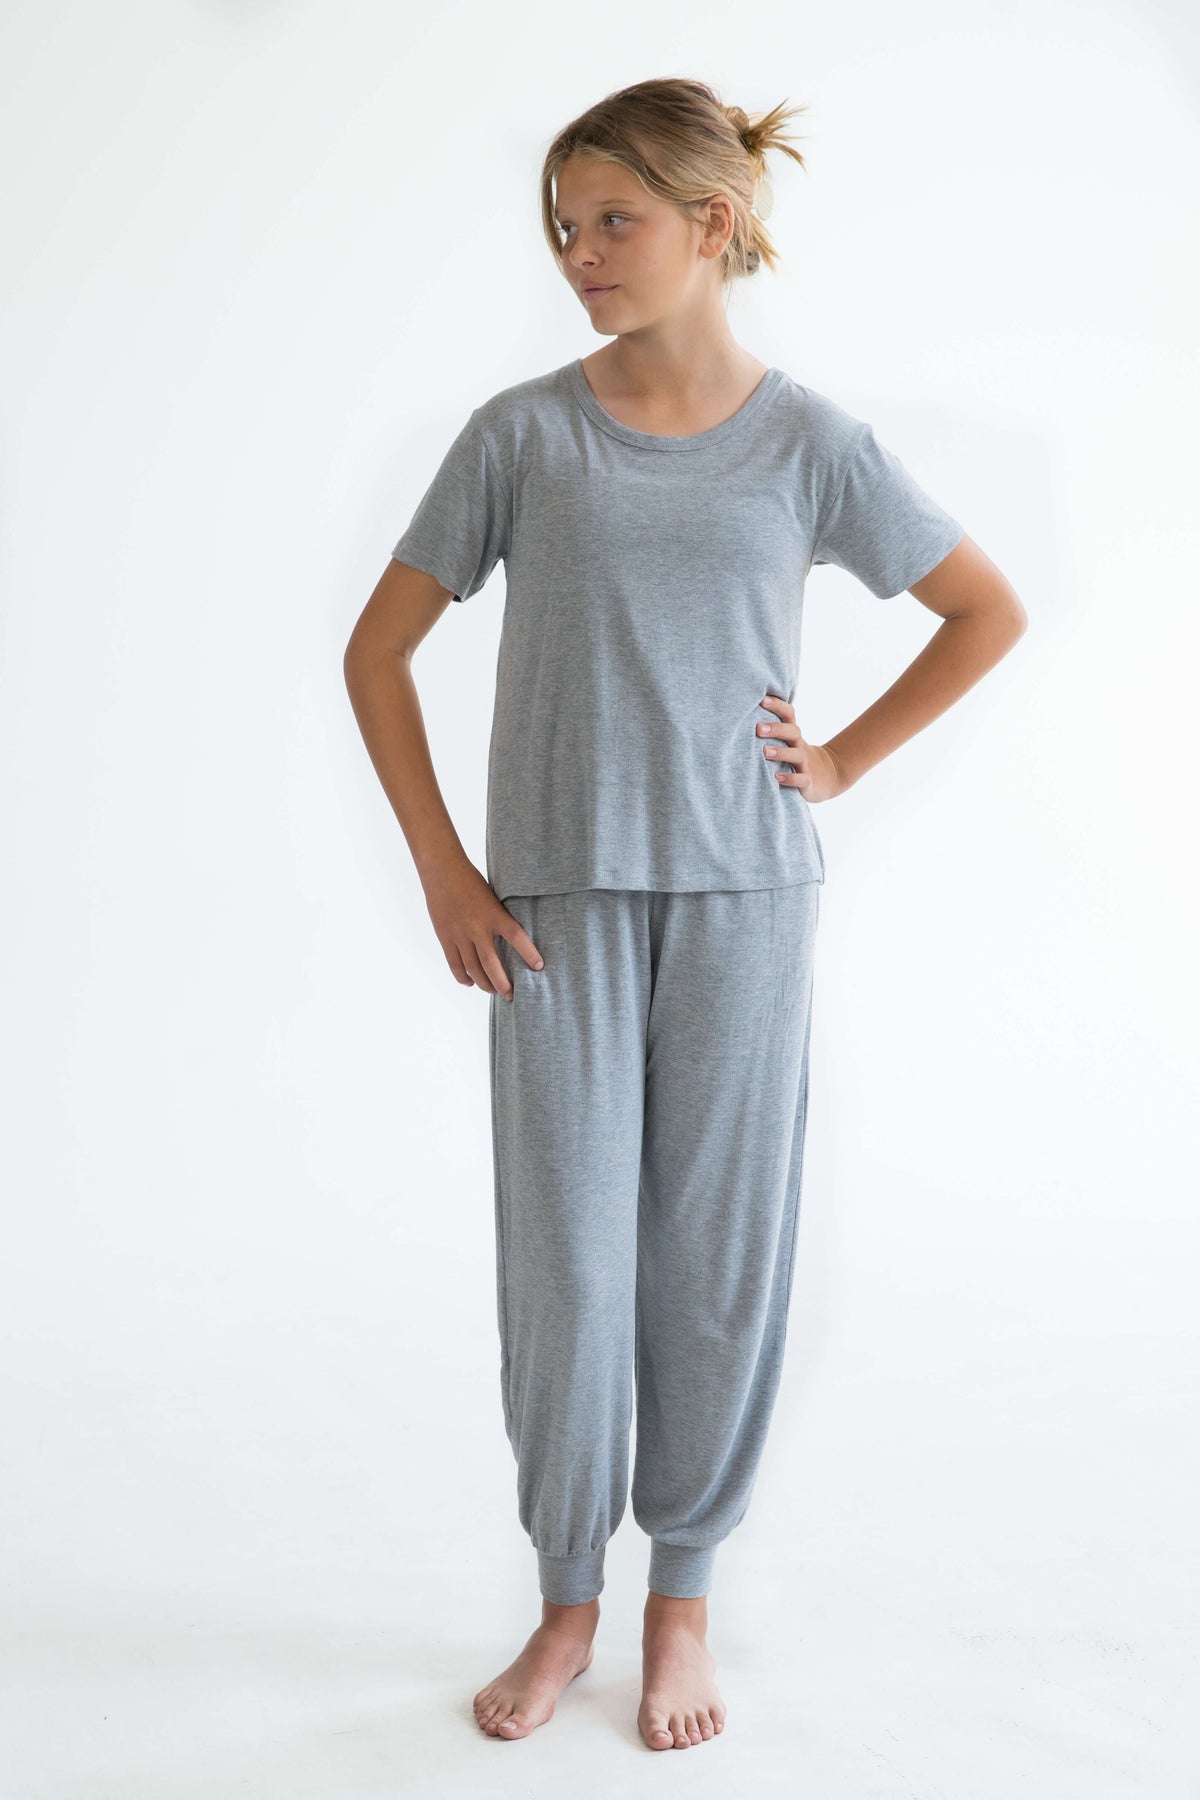 grey teen girls  short sleeve bamboo pyjama top by Love Haidee Australia front view Chloe